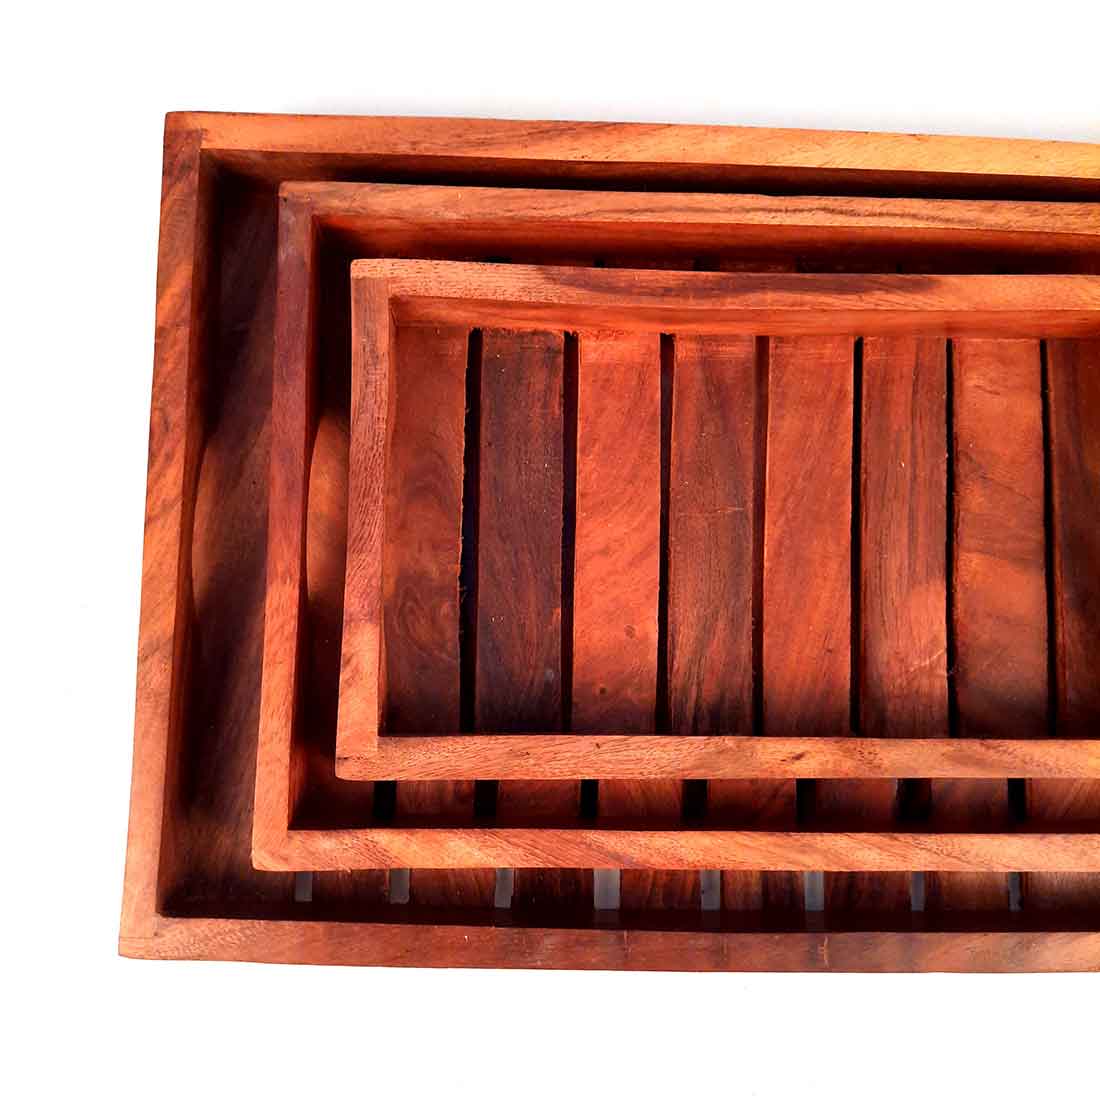 Wooden Tray Set - Decorative Trays for Wedding - 15 Inch-Set of 3 - ApkaMart